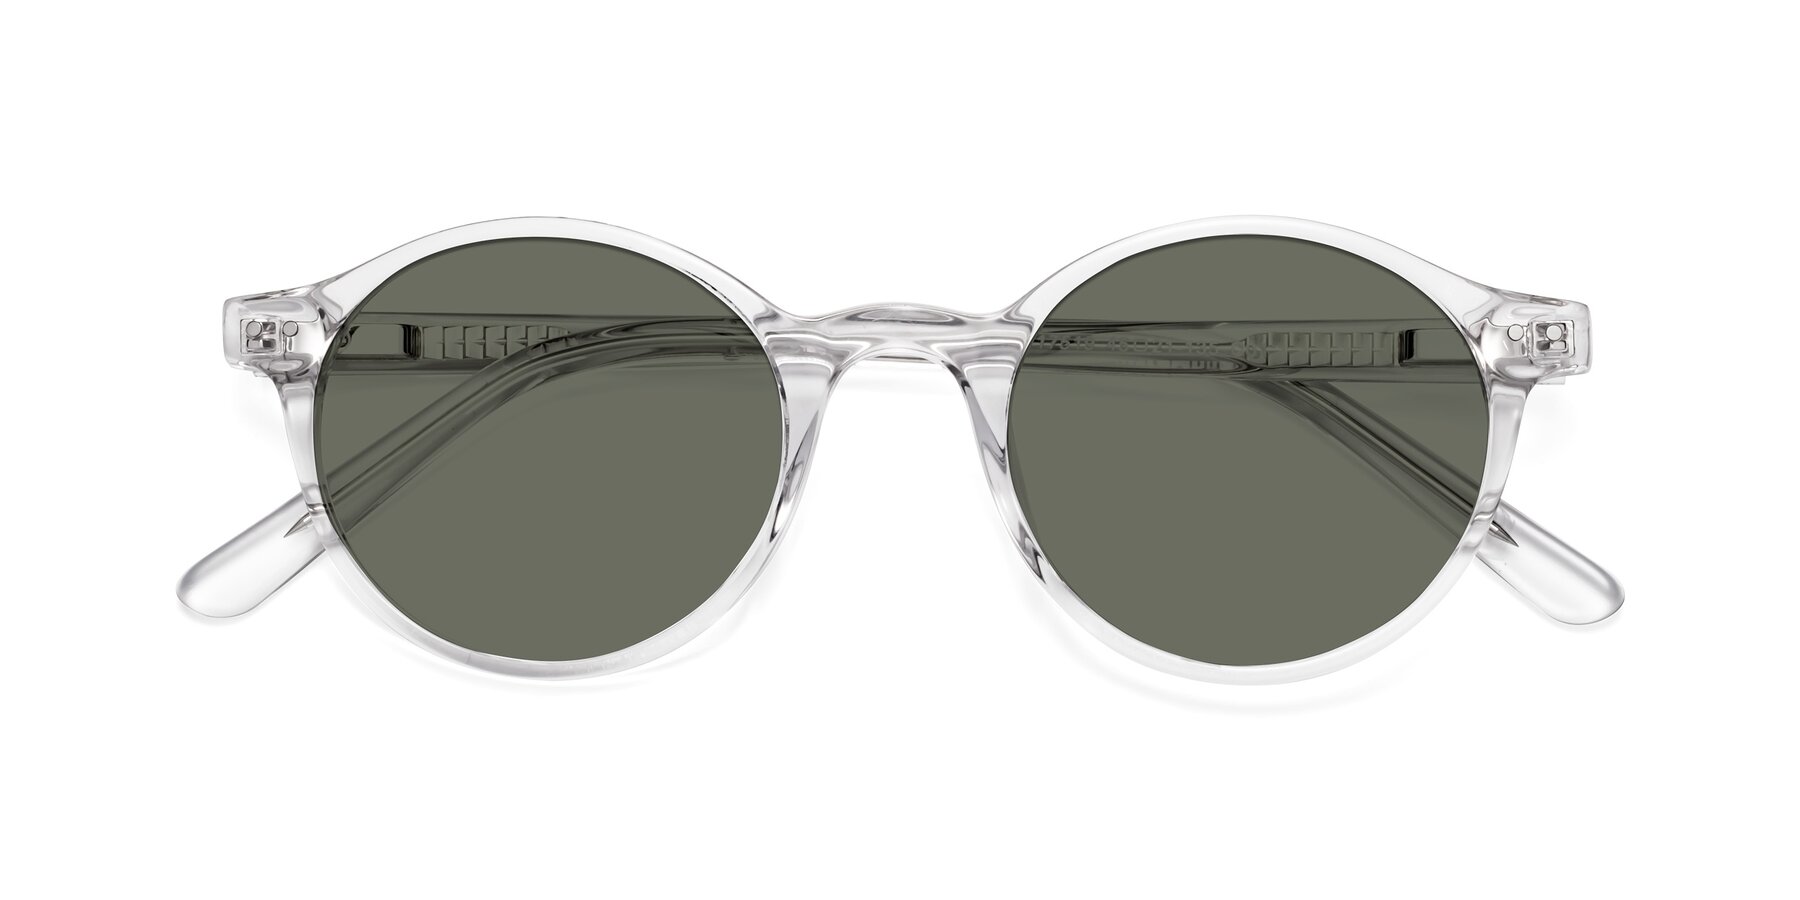 Clear Narrow Acetate Round Polarized Sunglasses with Gray Sunwear